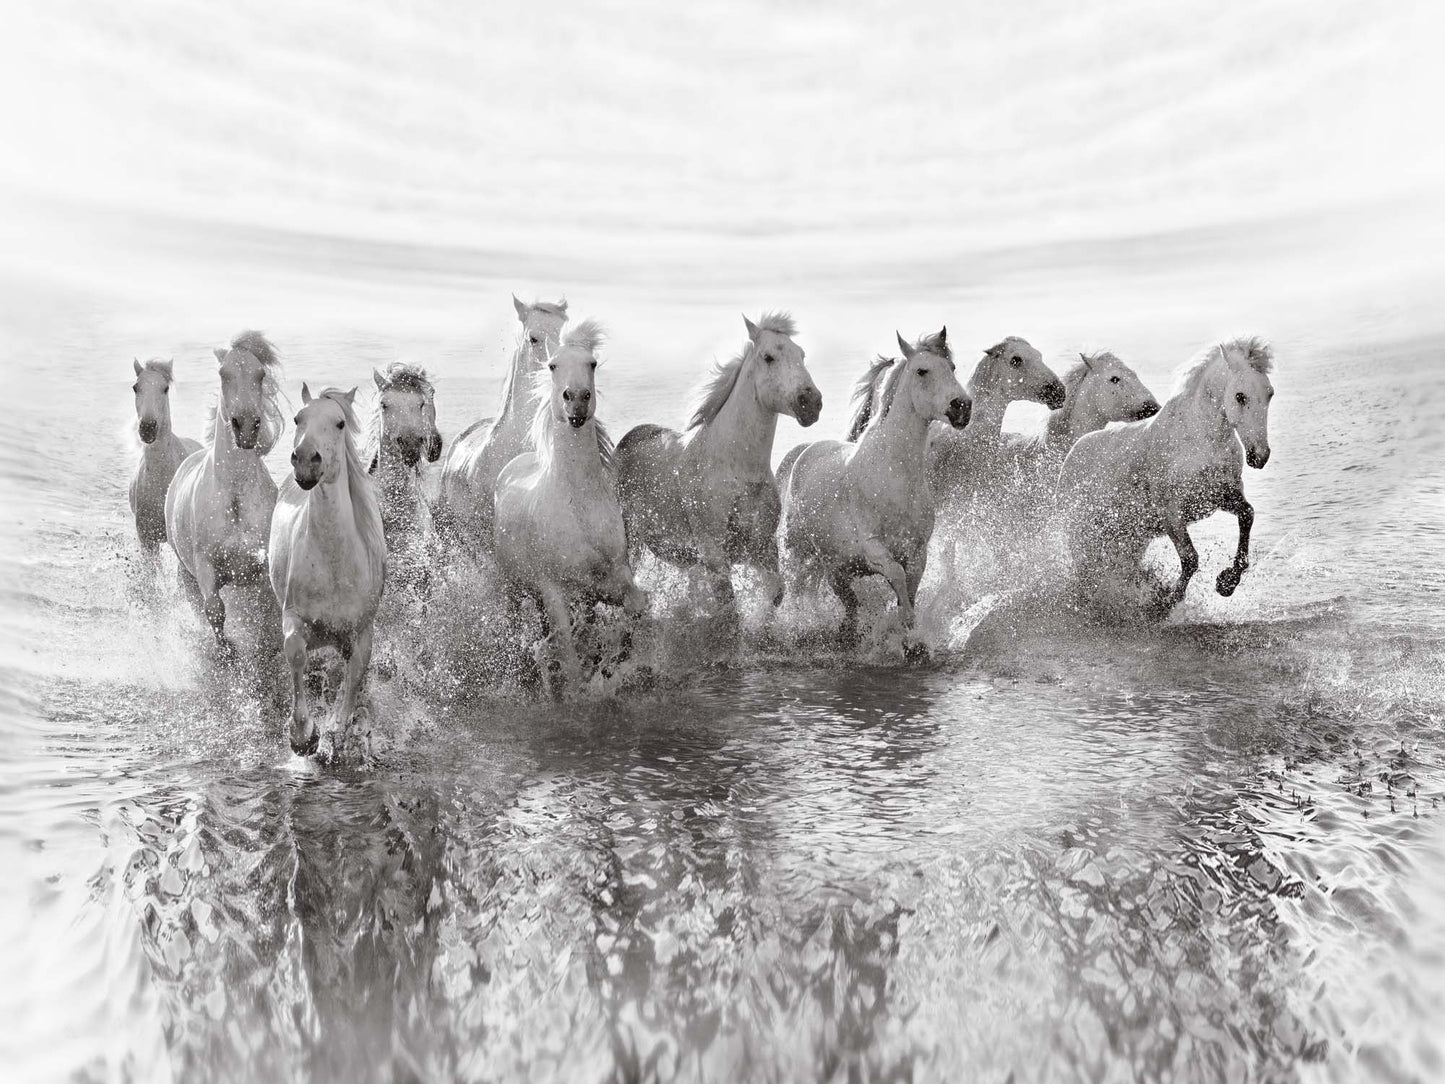 Illusion of Power (13 horse power though) by Roman Golubenko Canvas Print - USTAD HOME